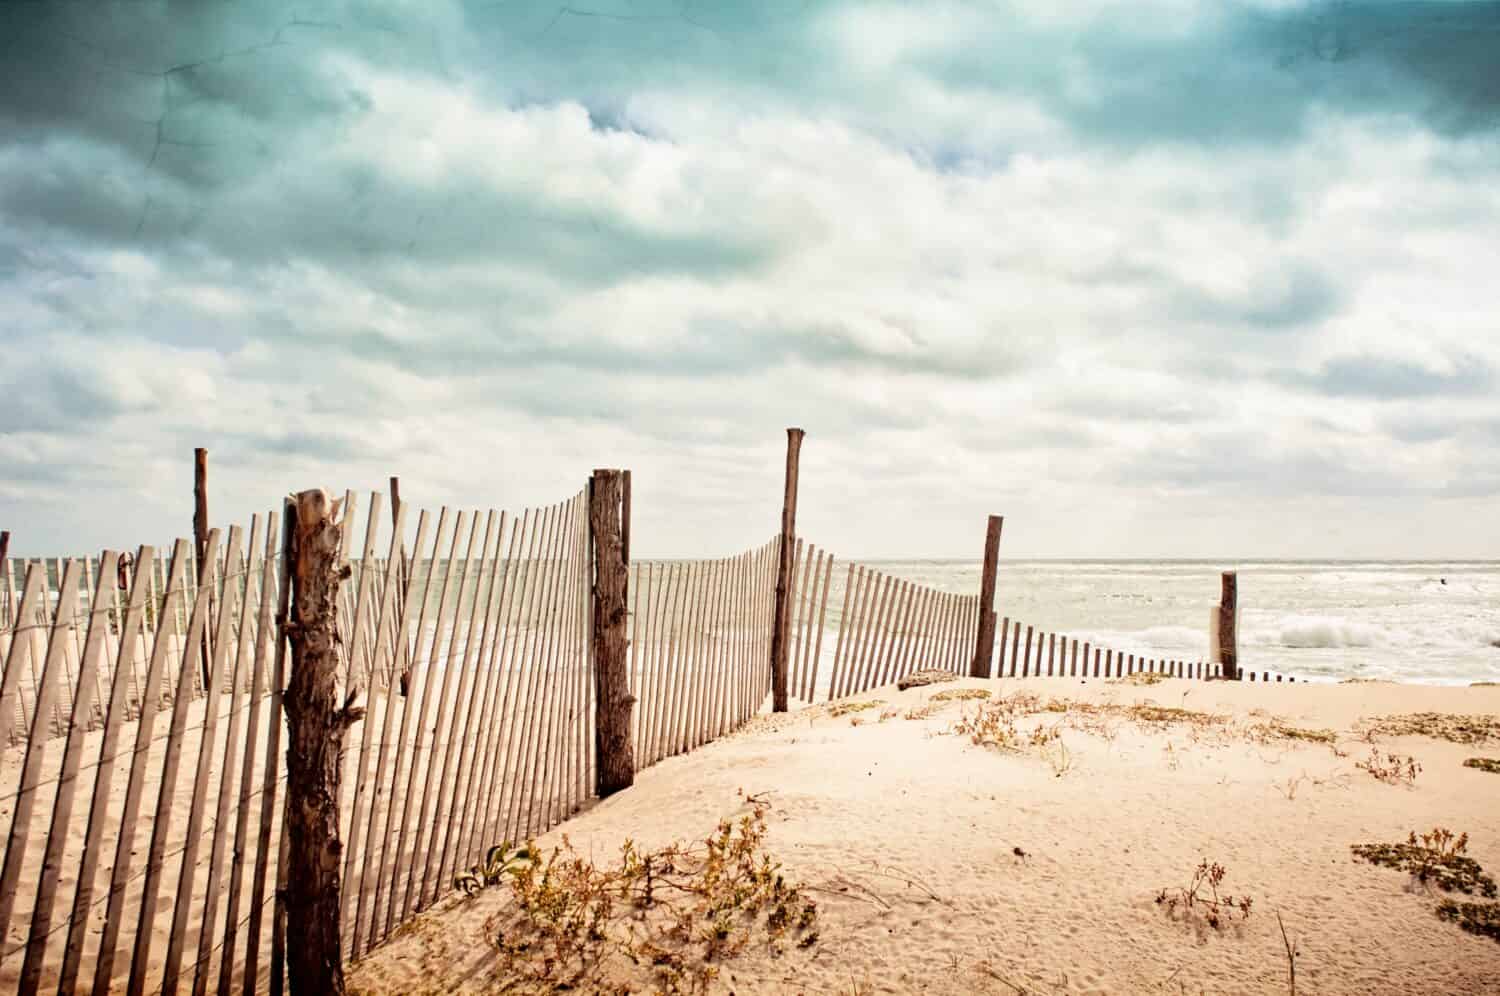 Beach scene on Long Beach Island, New Jersey.  Fence, dunes and moody sky.